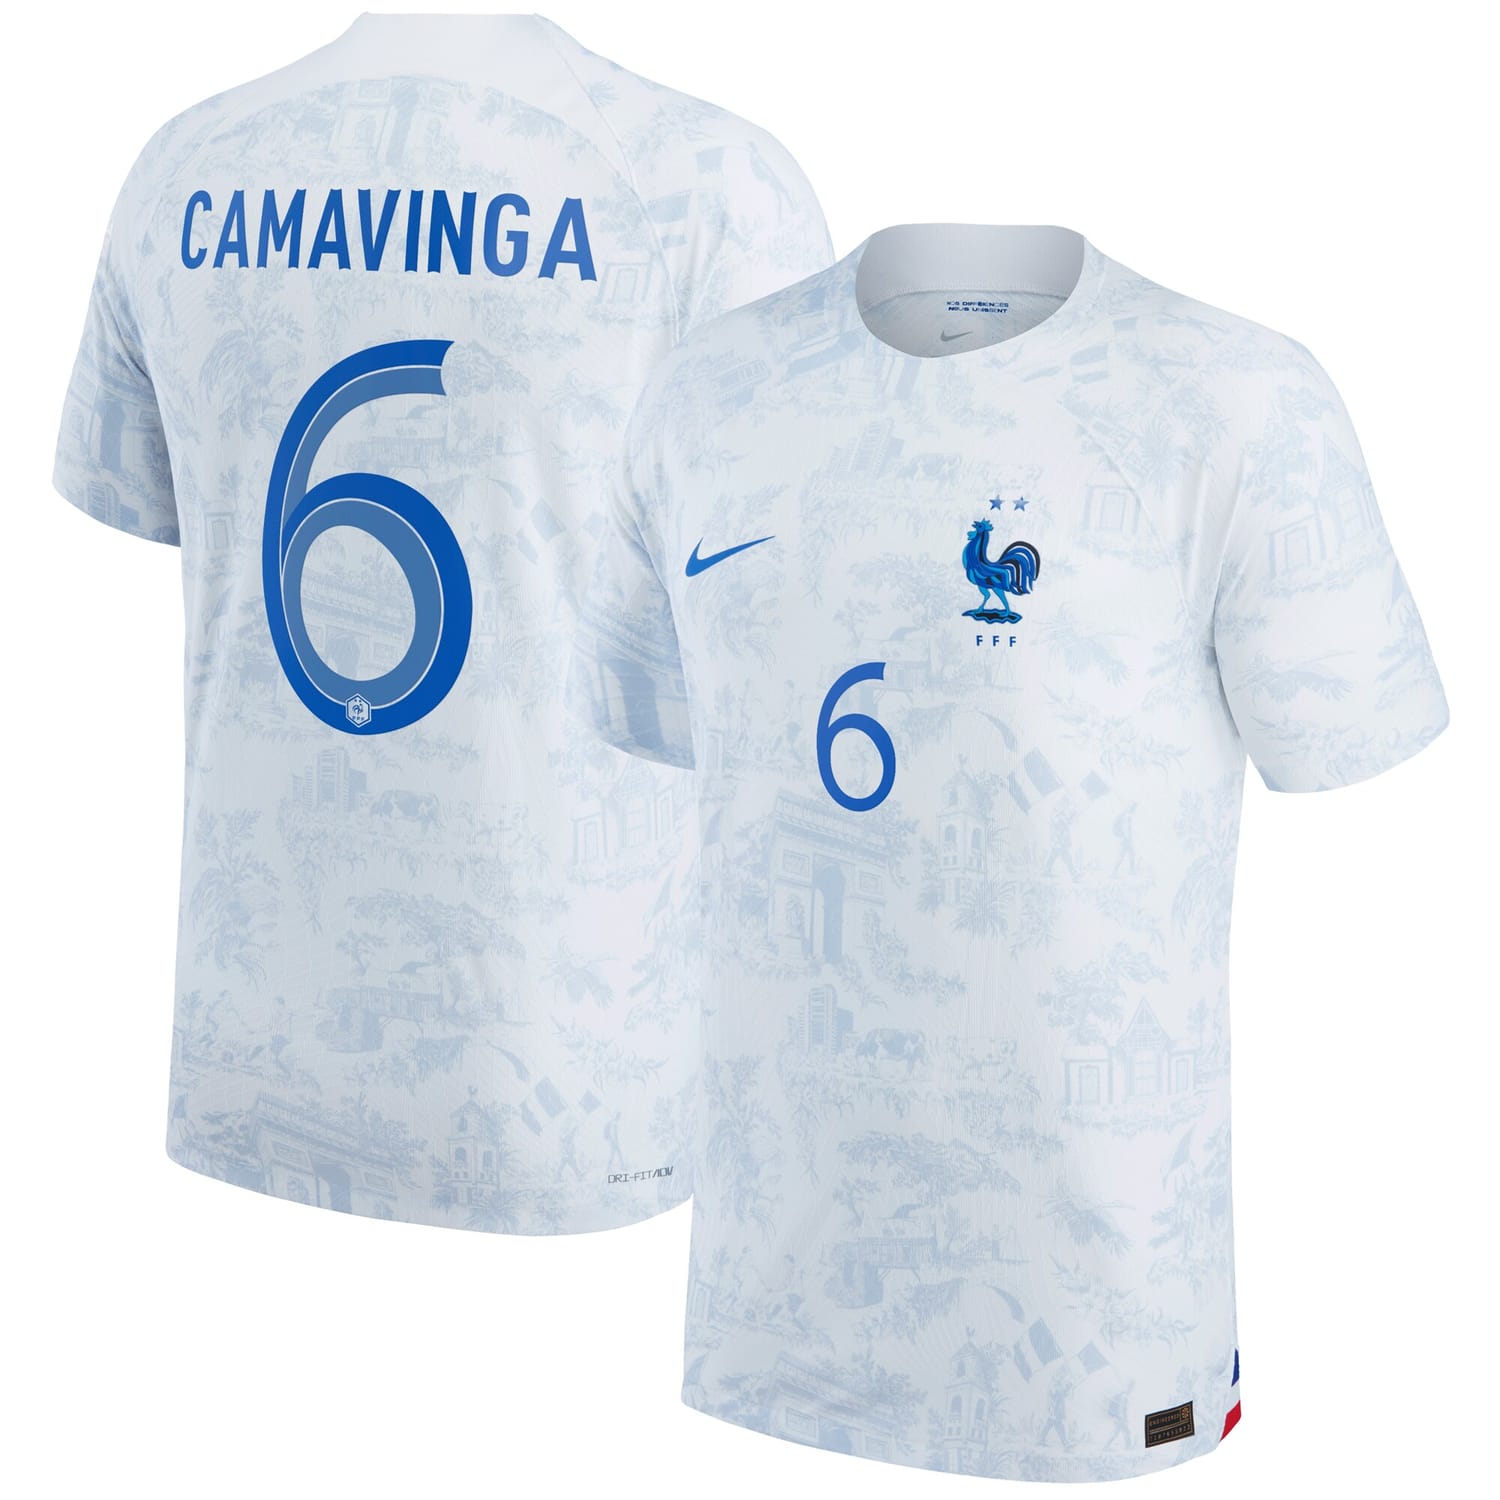 France National Team Away Authentic Jersey Shirt 2022 player Eduardo Camavinga 6 printing for Men